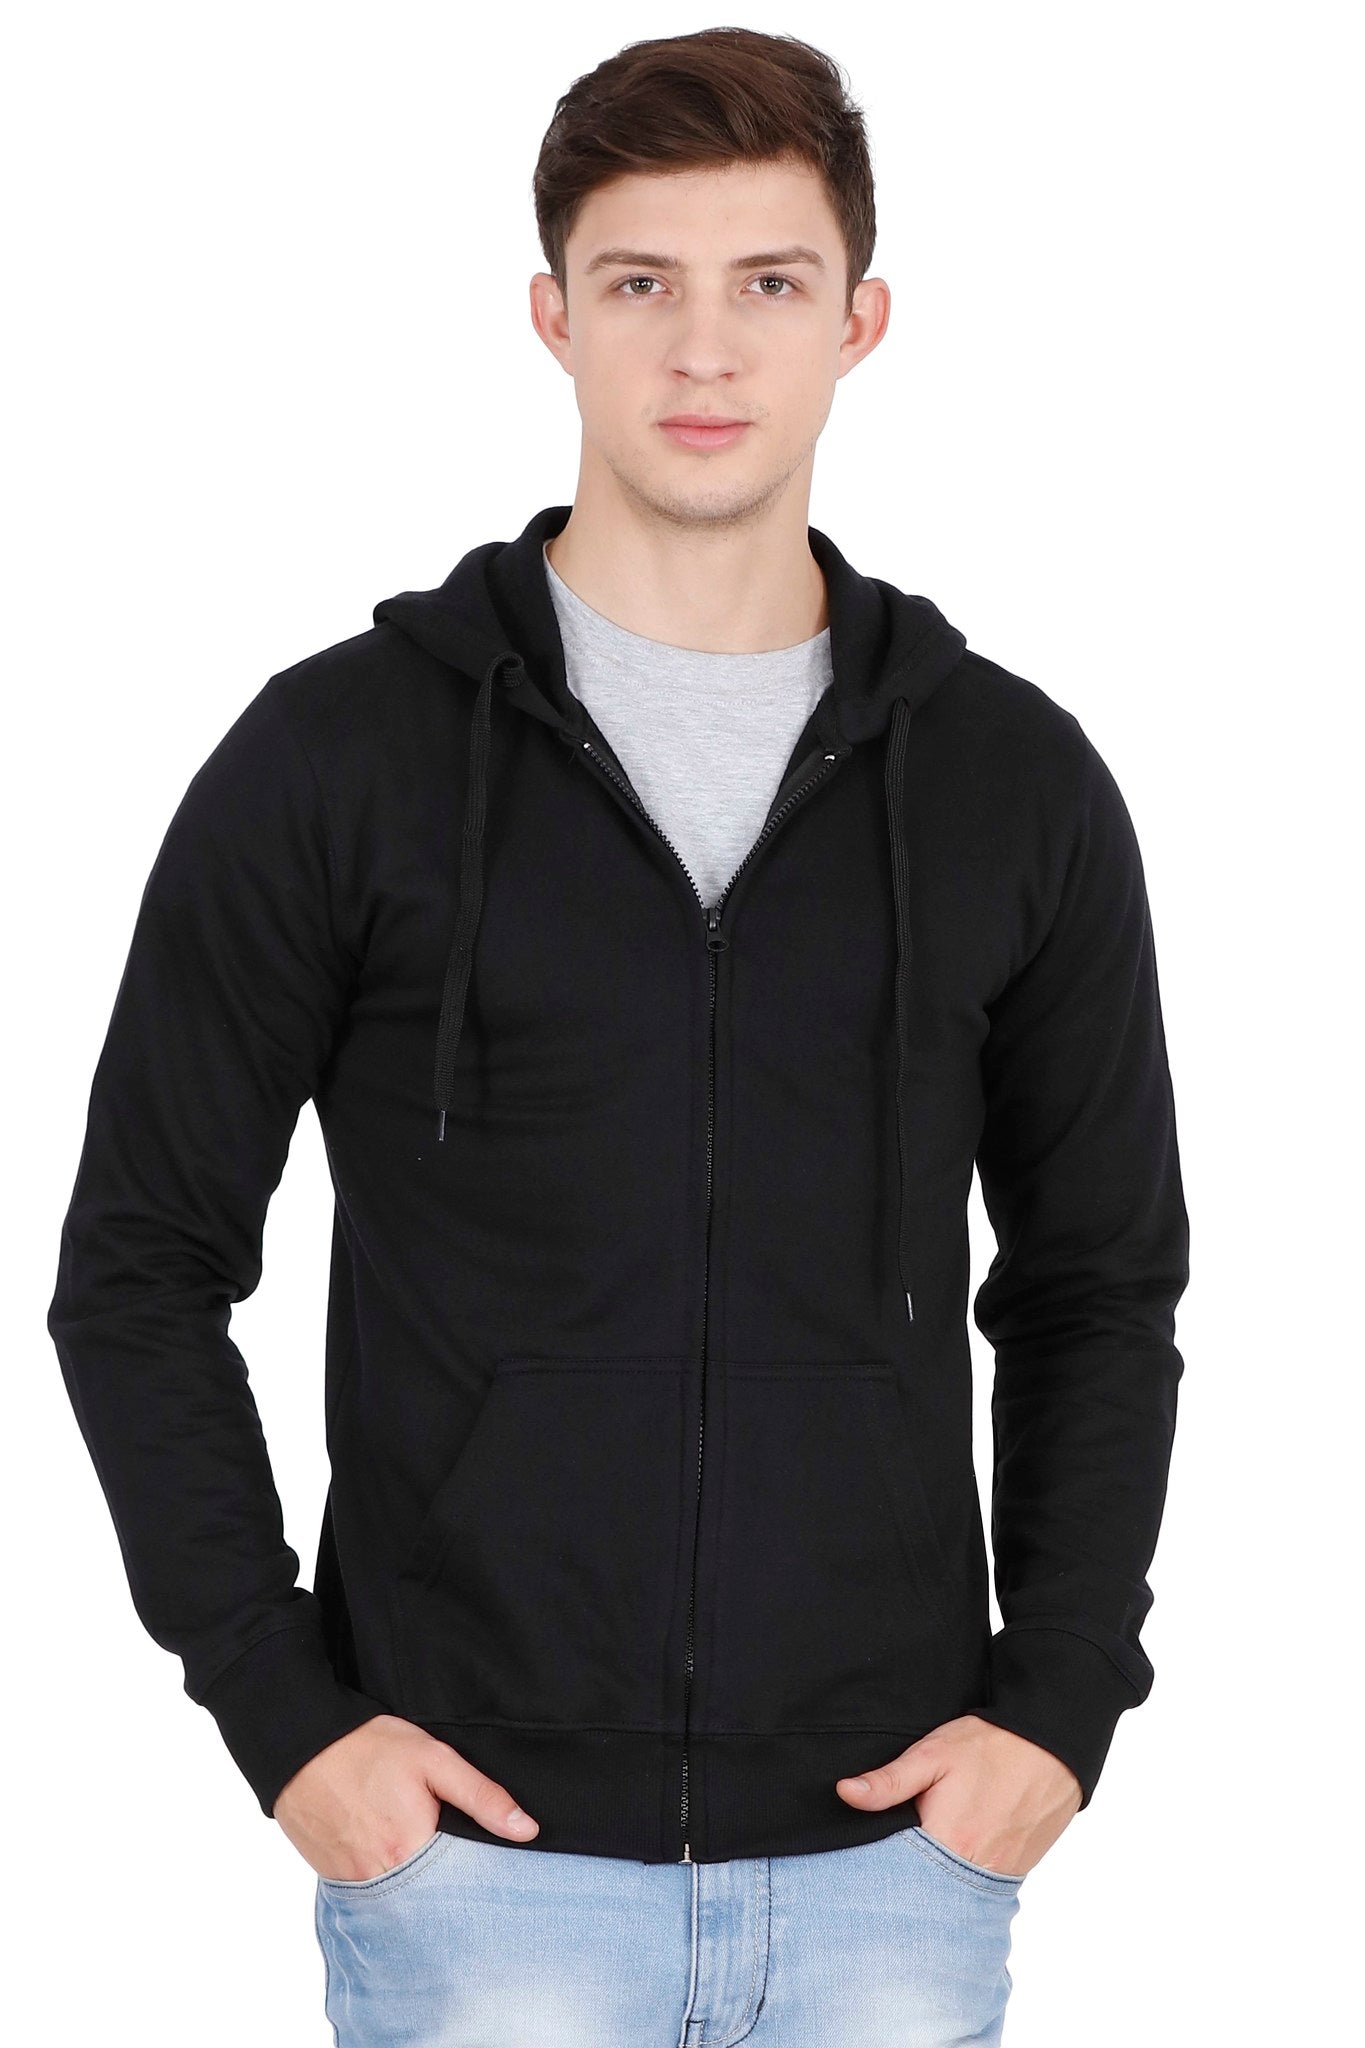 Men's Cotton Plain Full Sleeve Black Color Sweatshirt/Hoodies